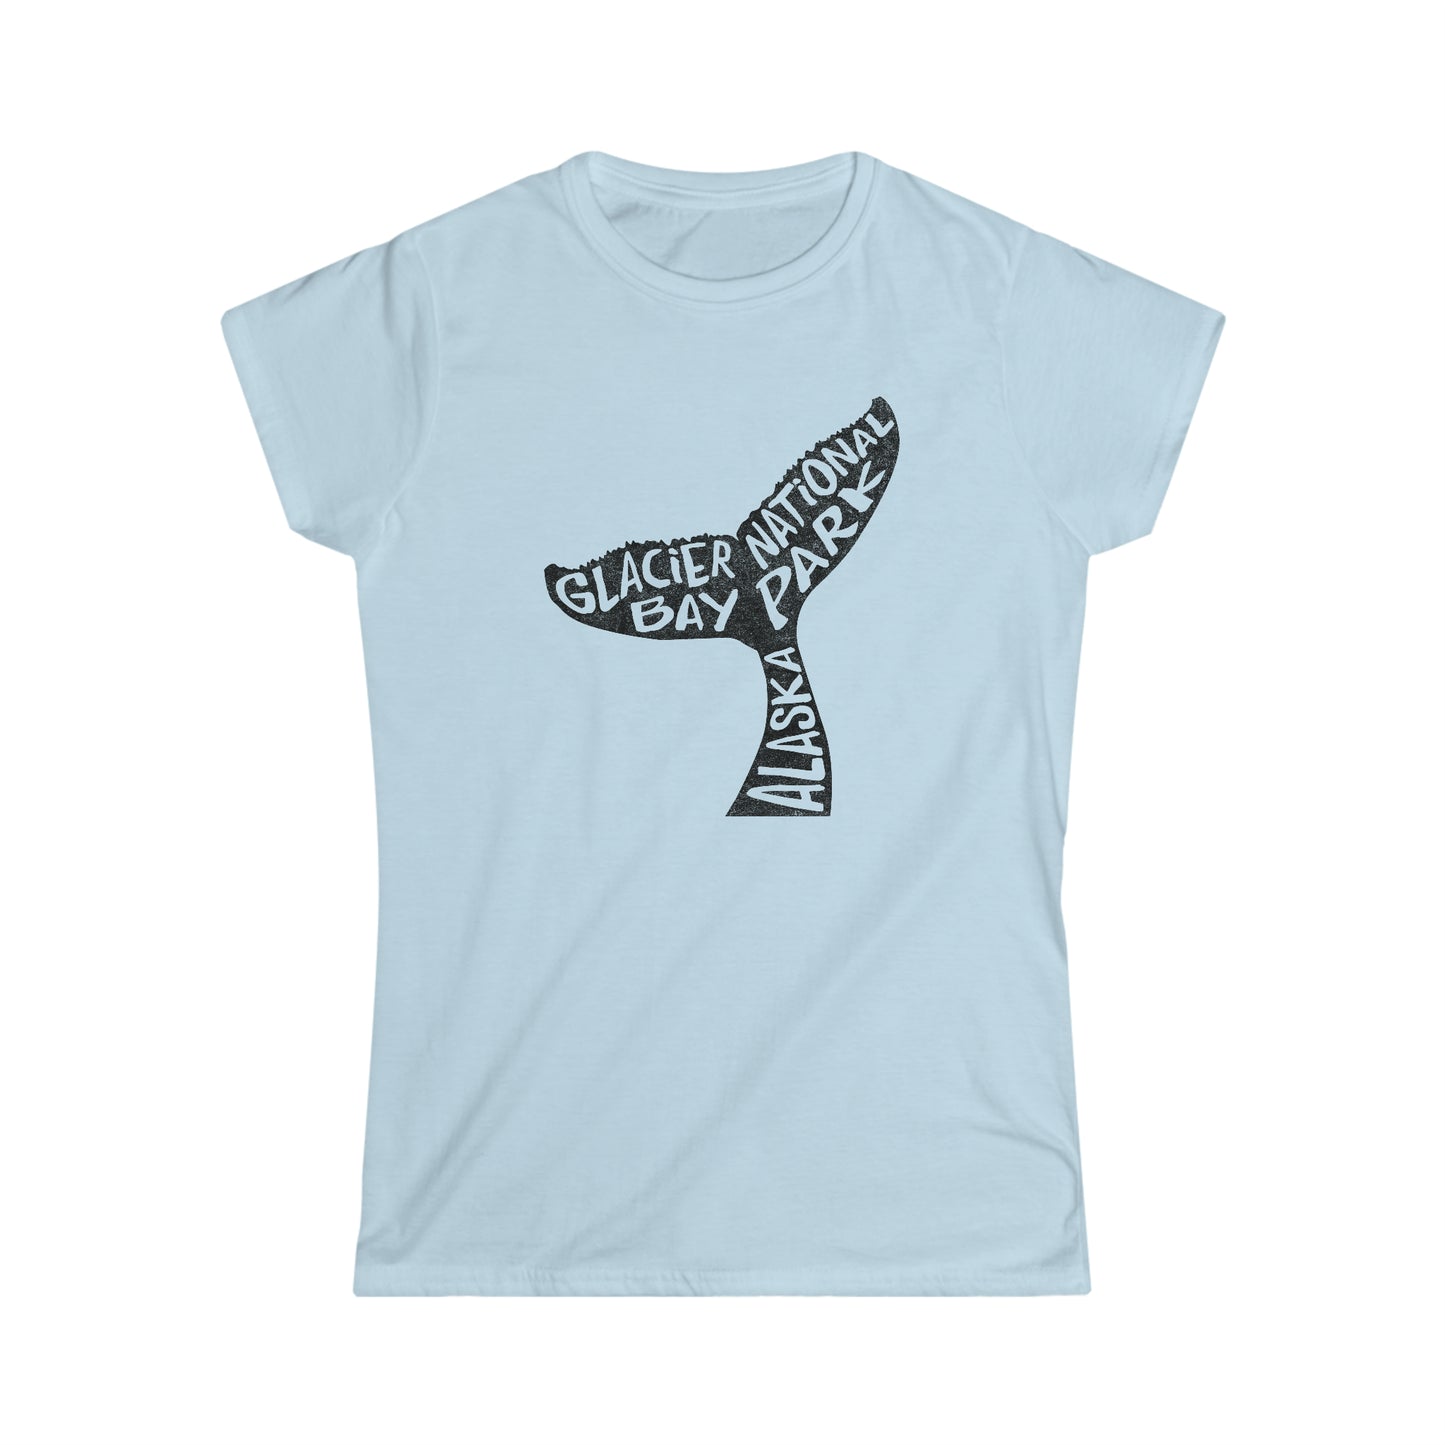 Glacier Bay National Park Women's T-Shirt - Whale Tail